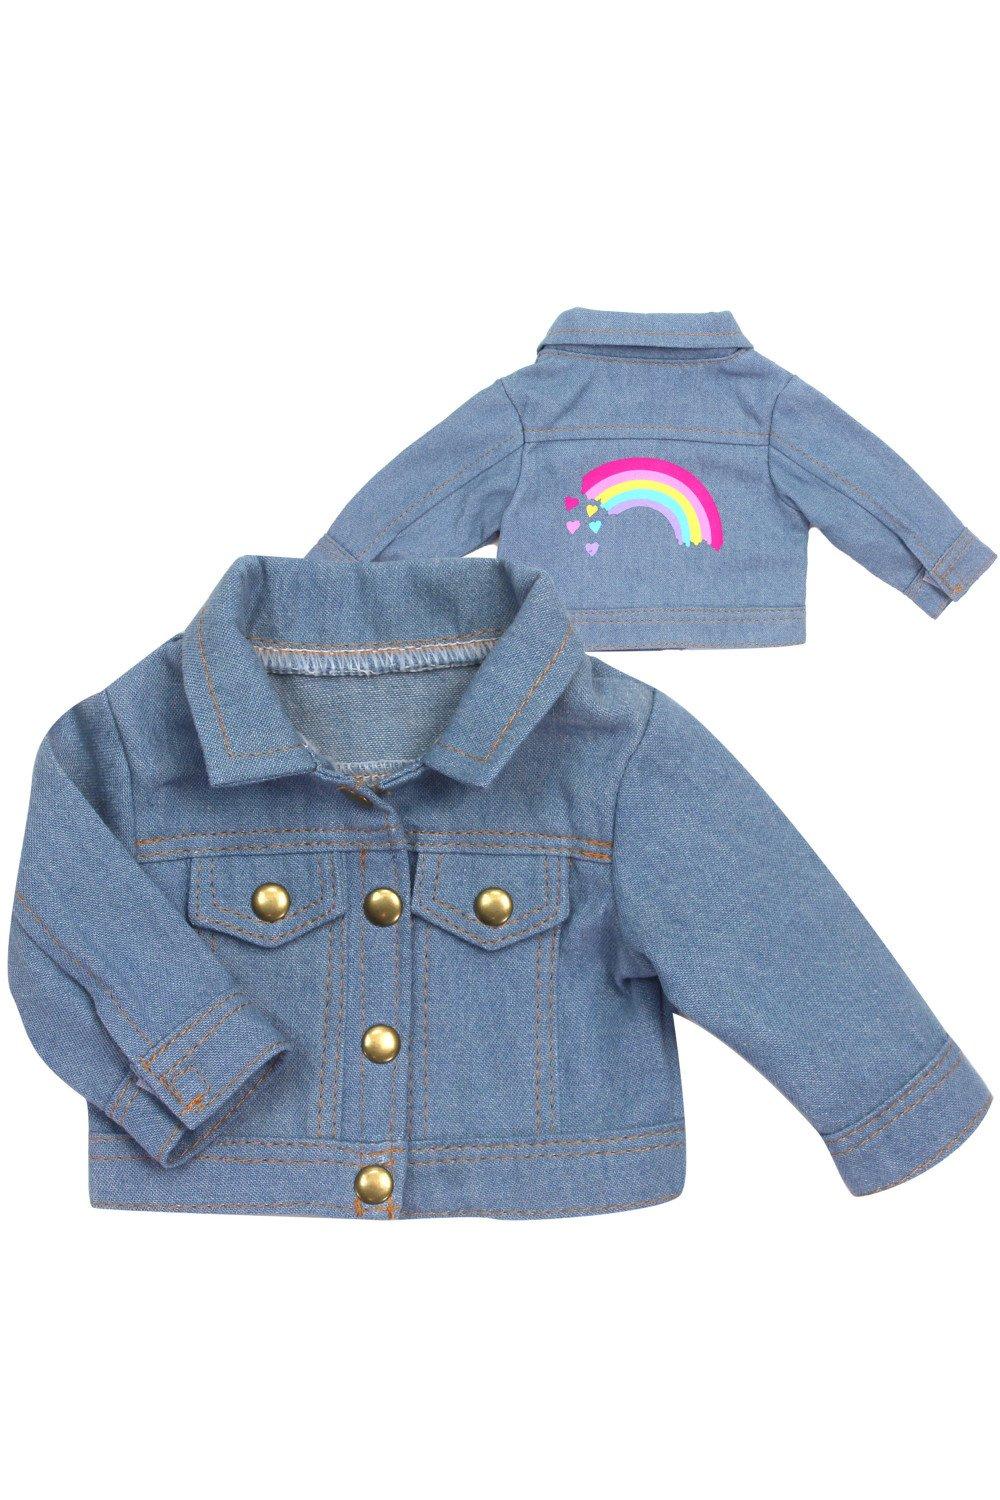 Sophia’s  18" Baby Doll Denim Jean Jacket with Rainbow Design